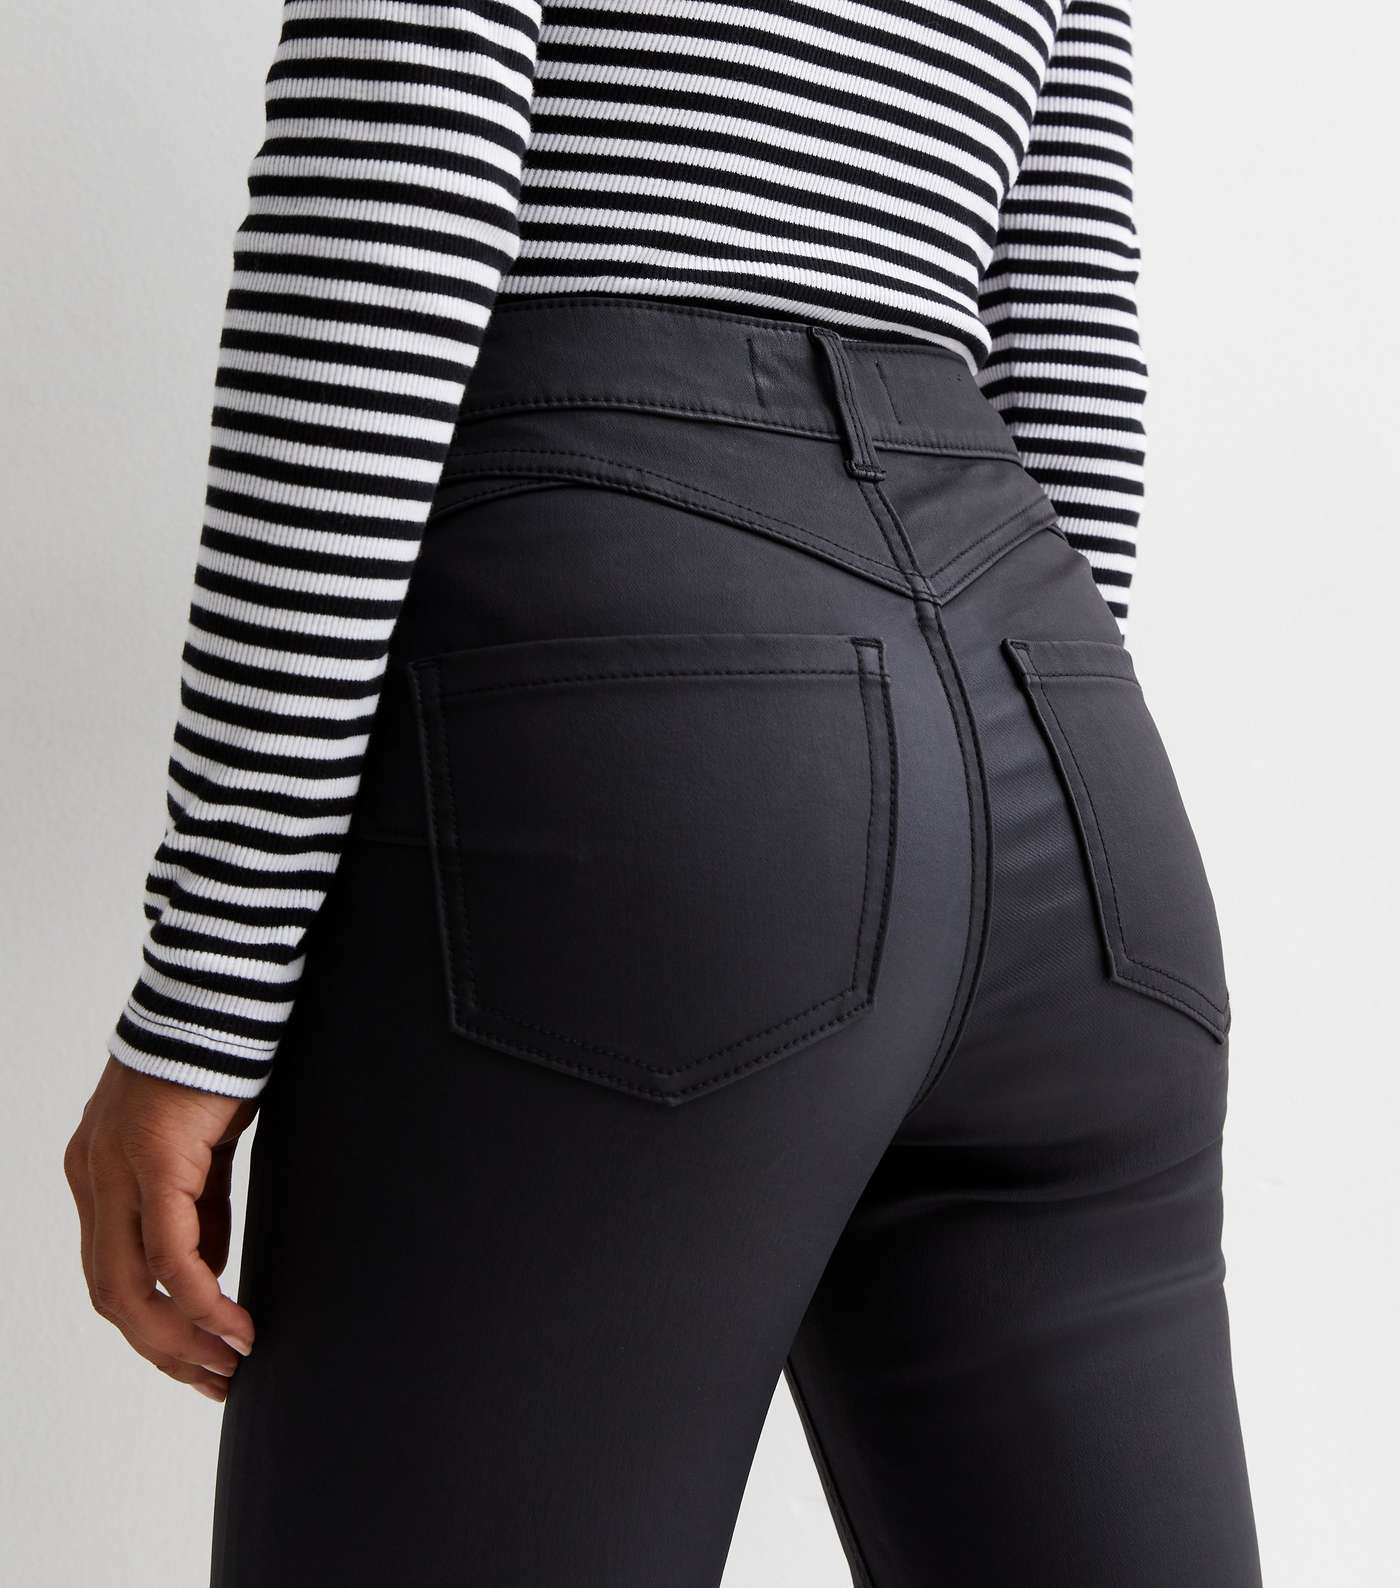 Petite Black Coated Leather-Look Lift & Shape Jenna Skinny Jeans Image 5